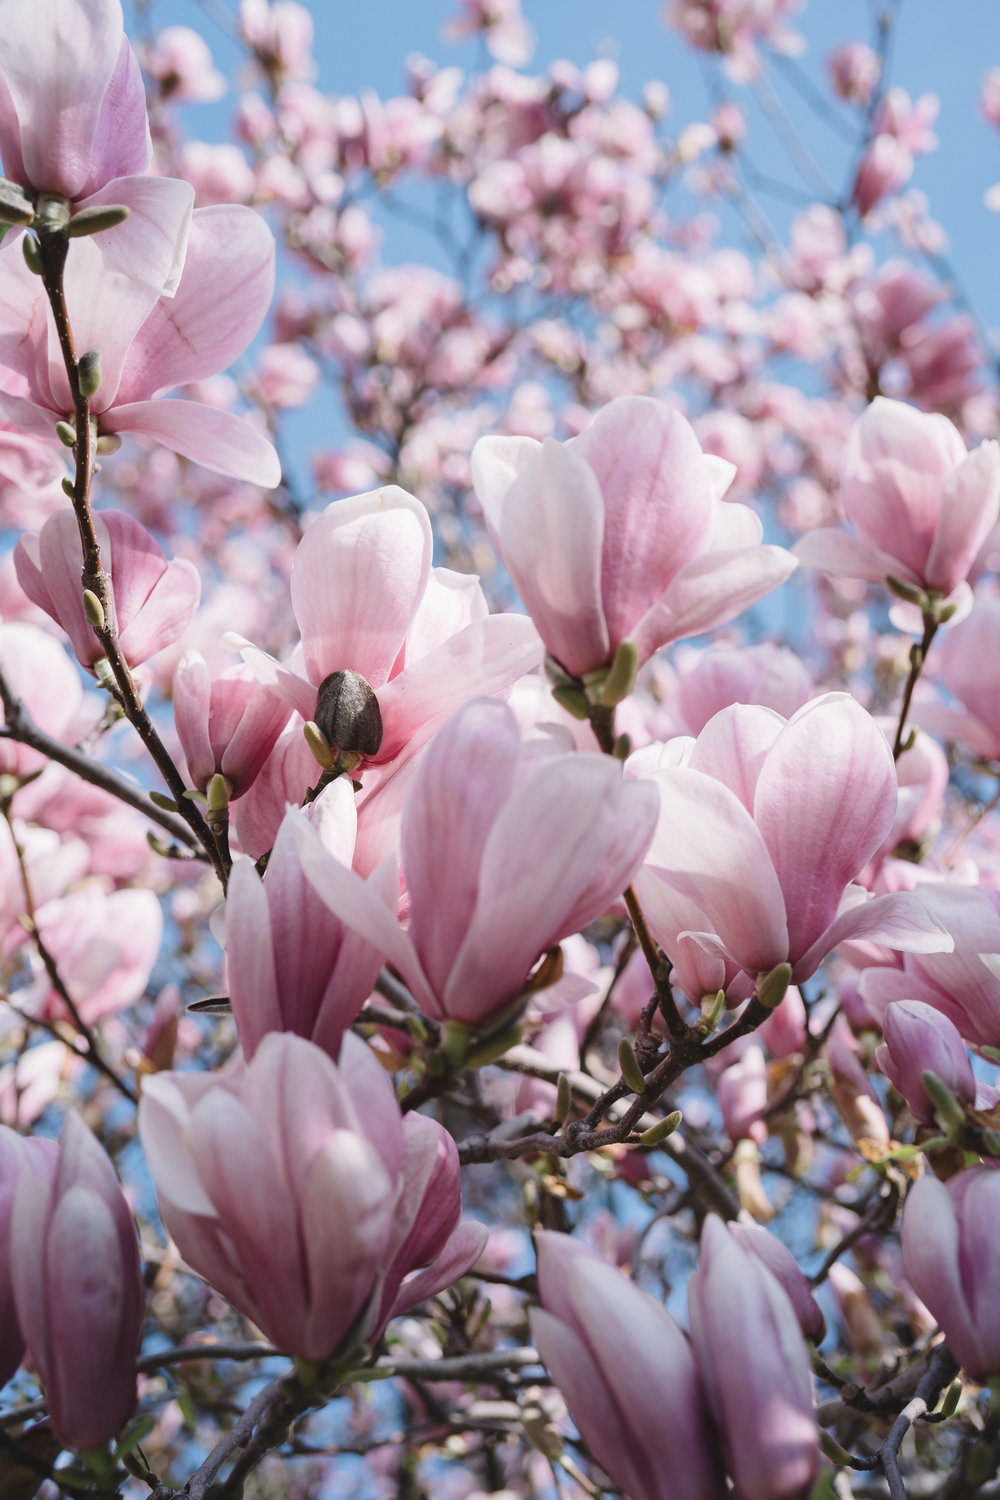 deciduous-magnolia-the-treeshop-nursery-melbourne.jpg